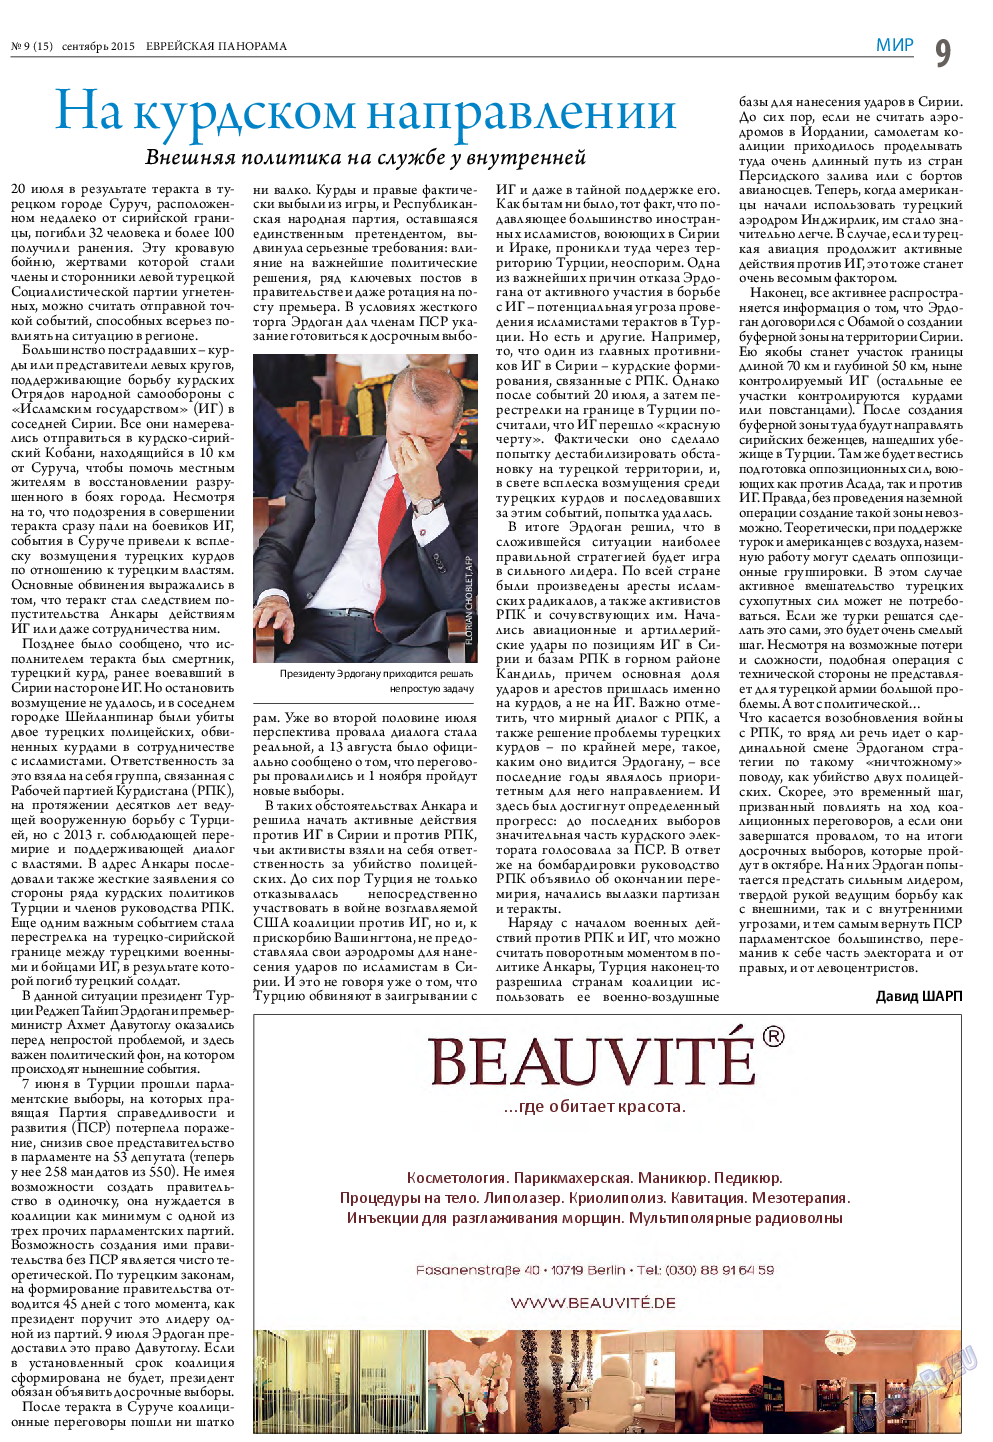 Еврейская панорама, газета. 2015 №9 стр.9